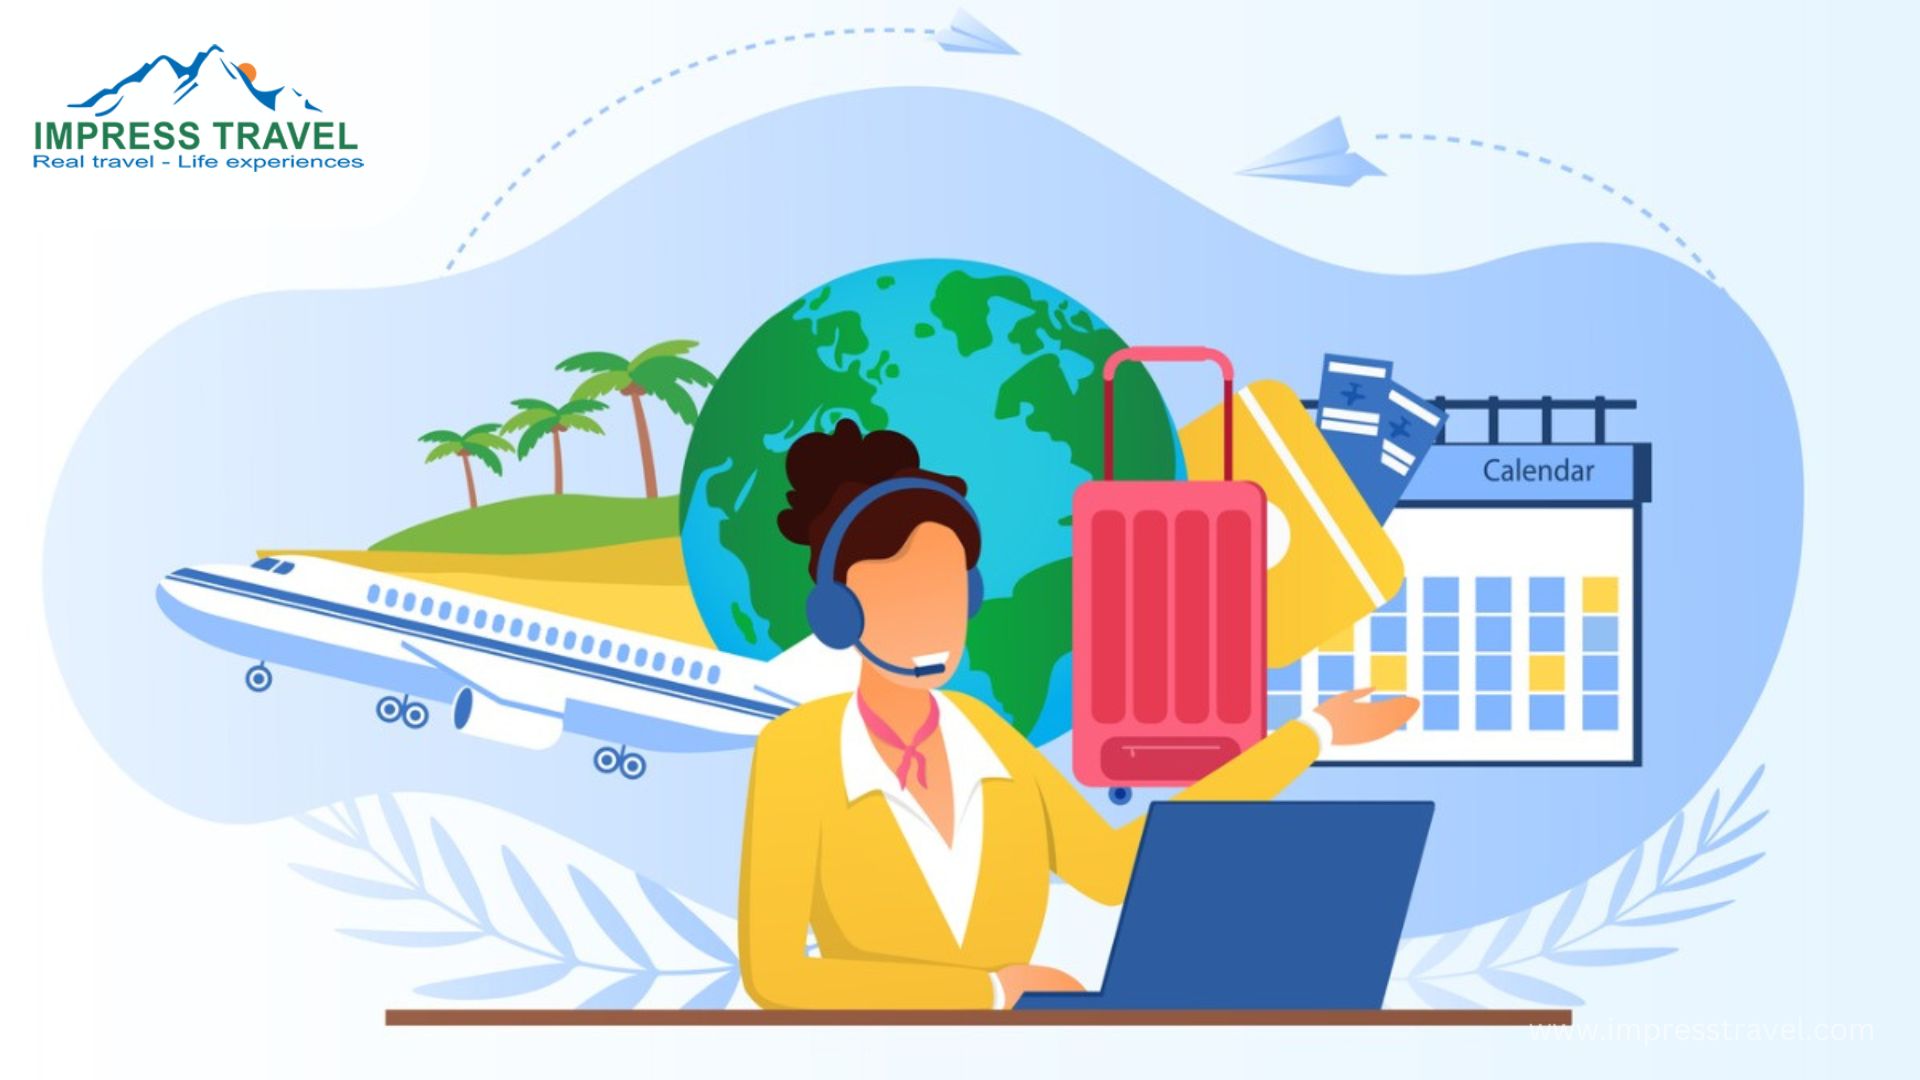 Reputable Online Travel Agencies (OTAs)